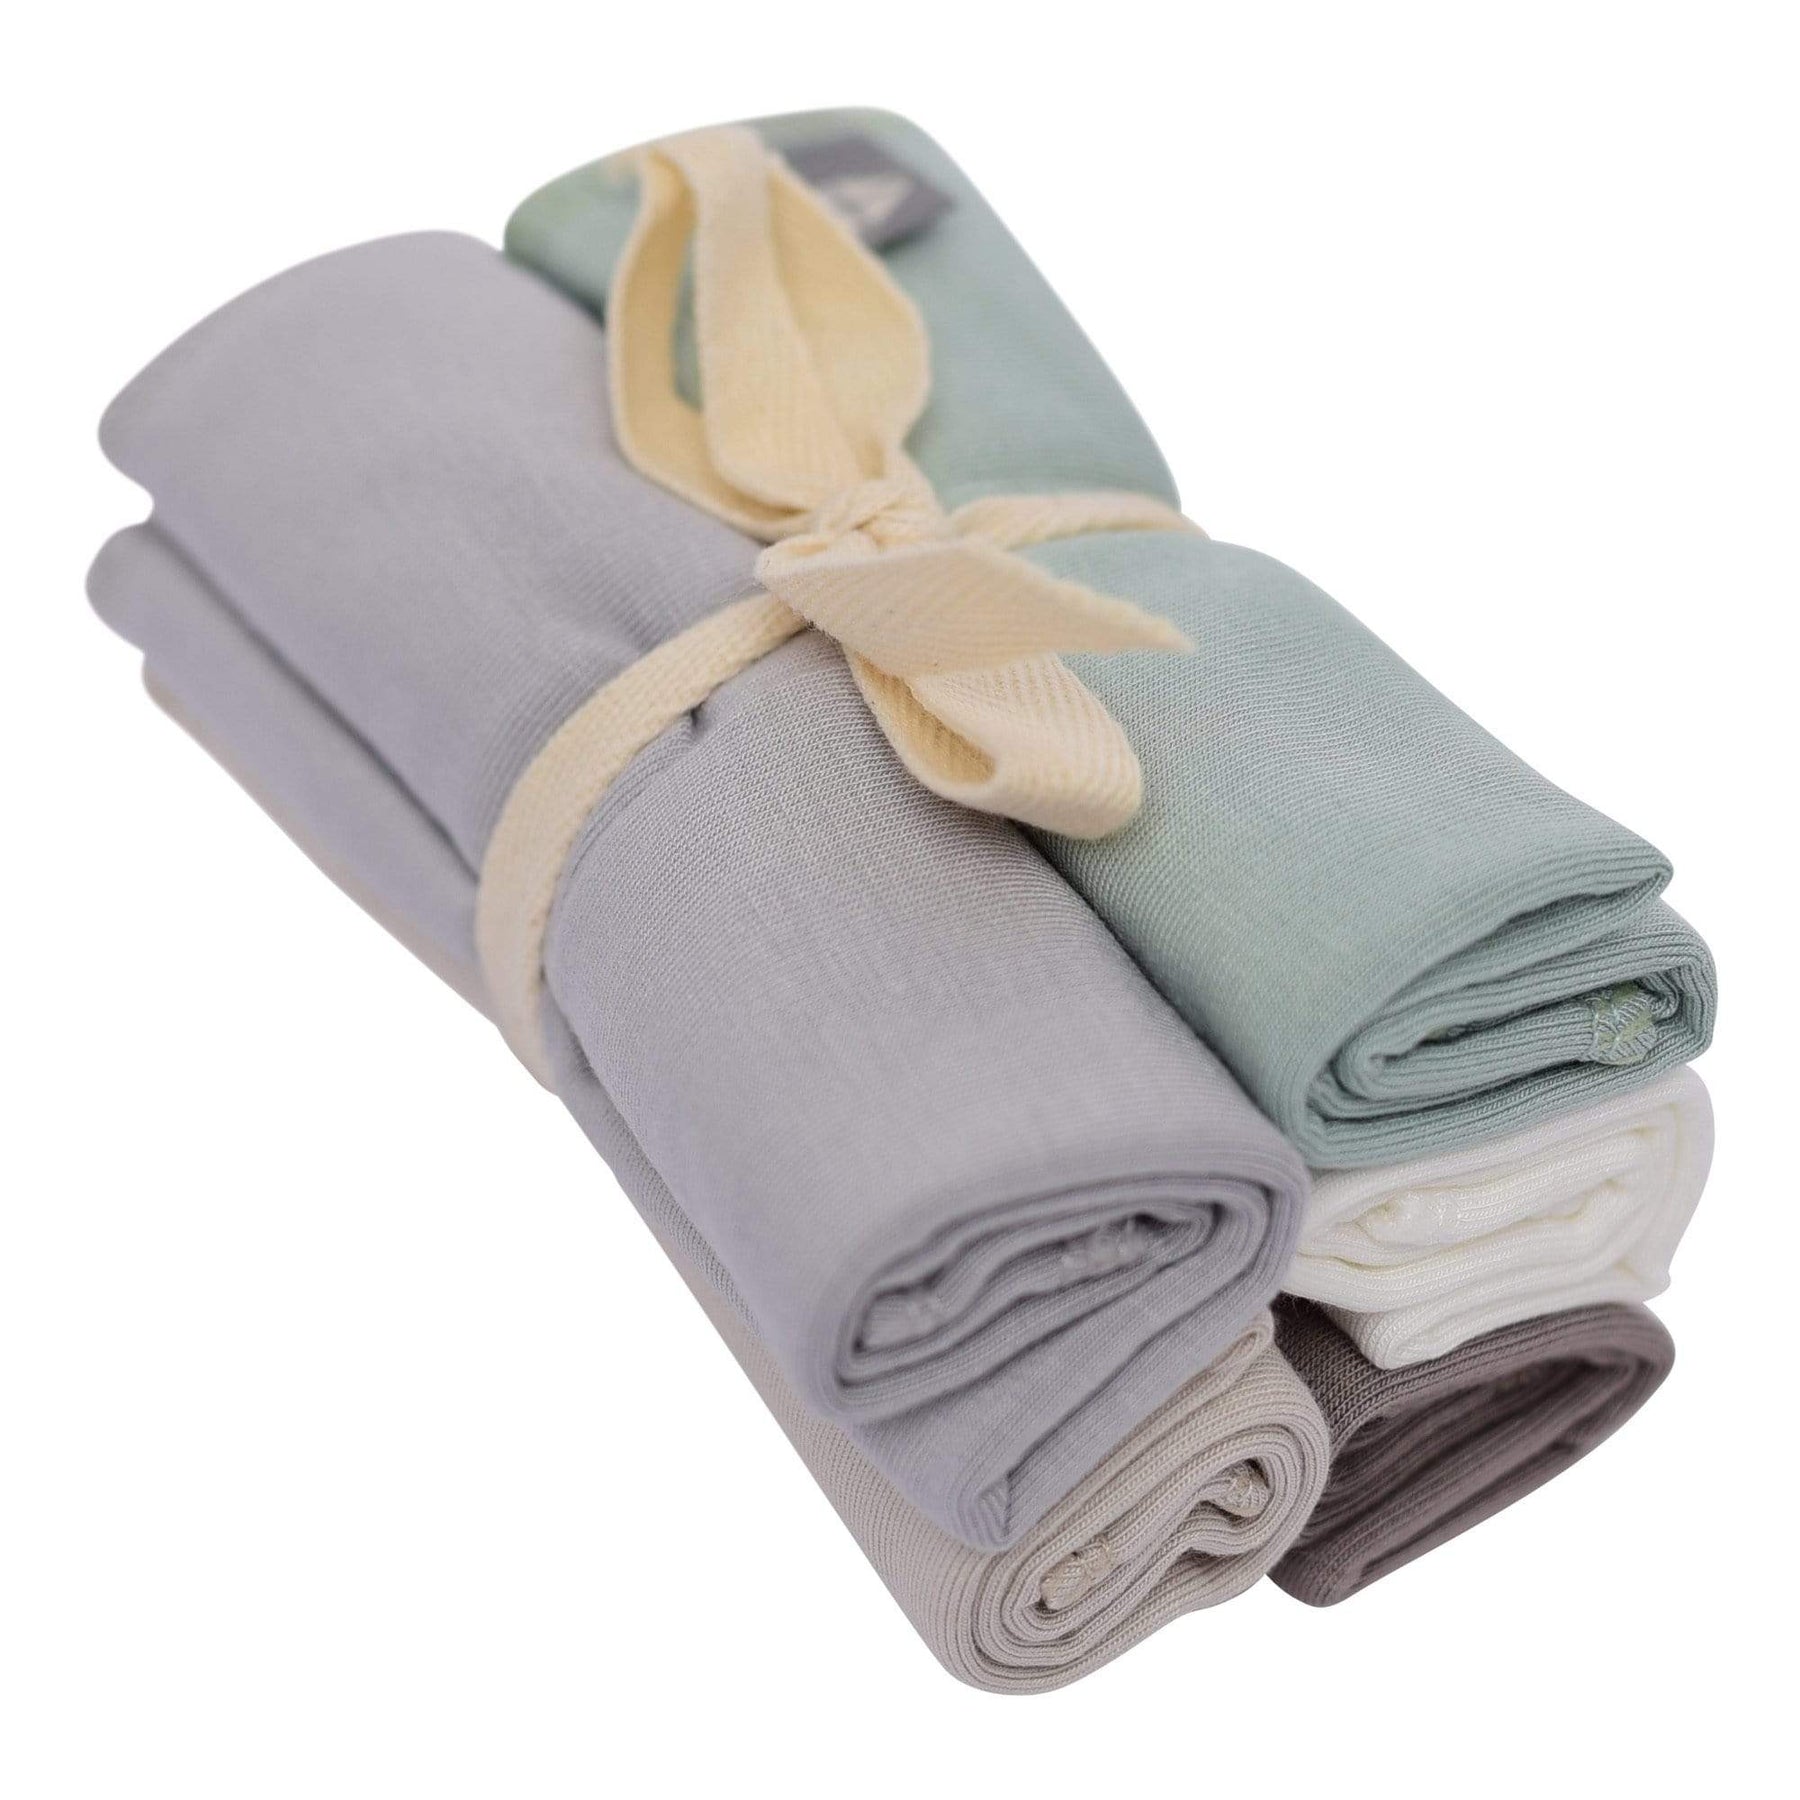 Buy Wholesale China Microfiber Wash Cloth Towel Kid Baby Small